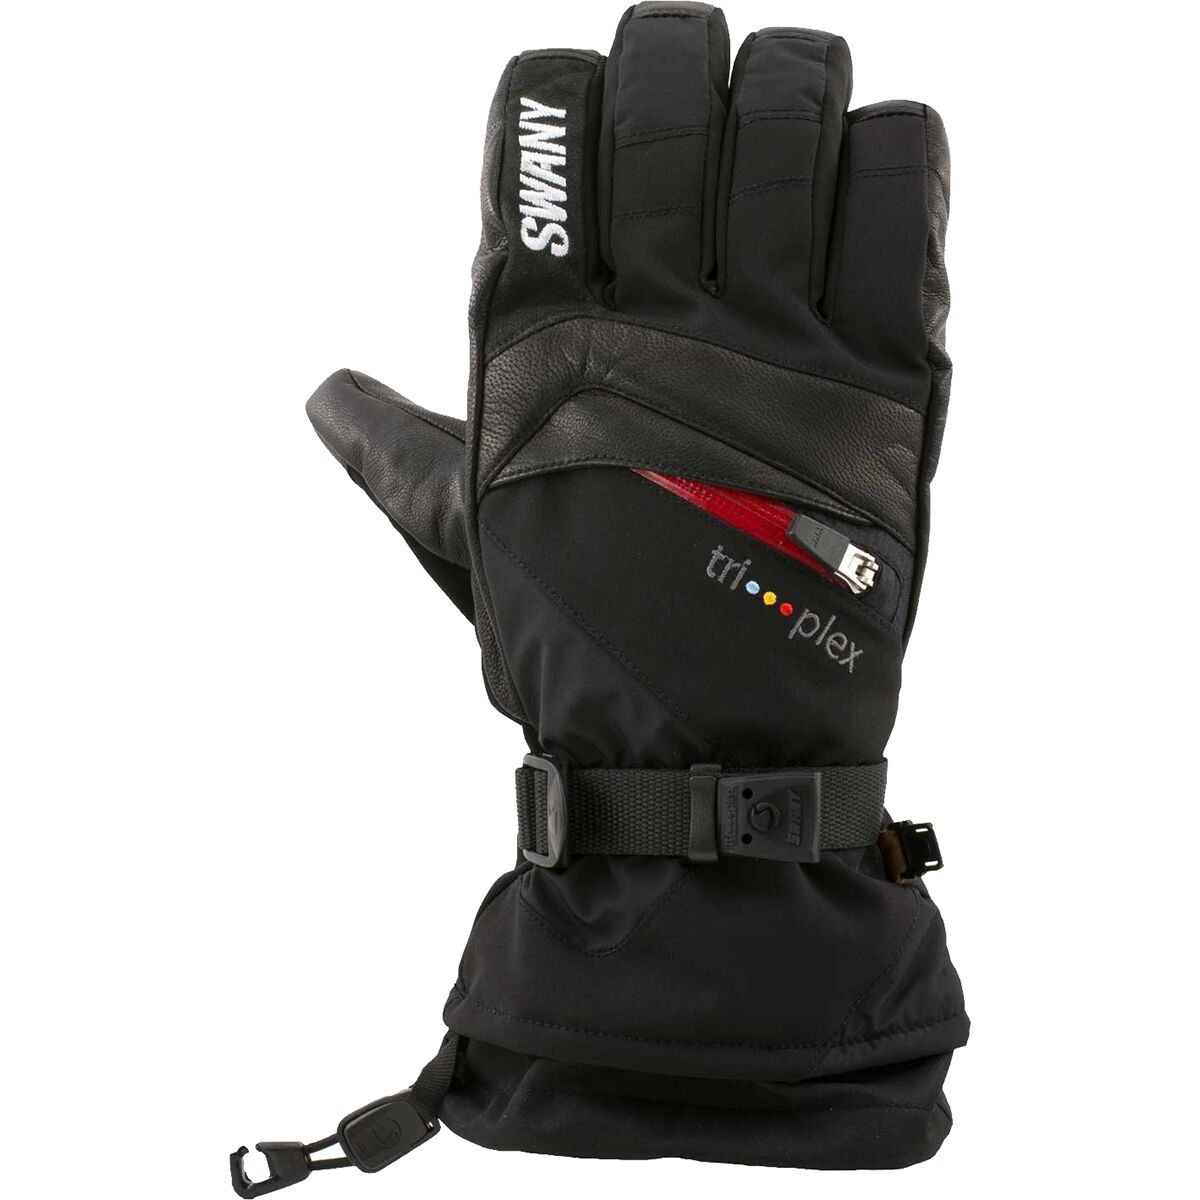 Swany X-Change Glove - Men's Black/Red Zipper